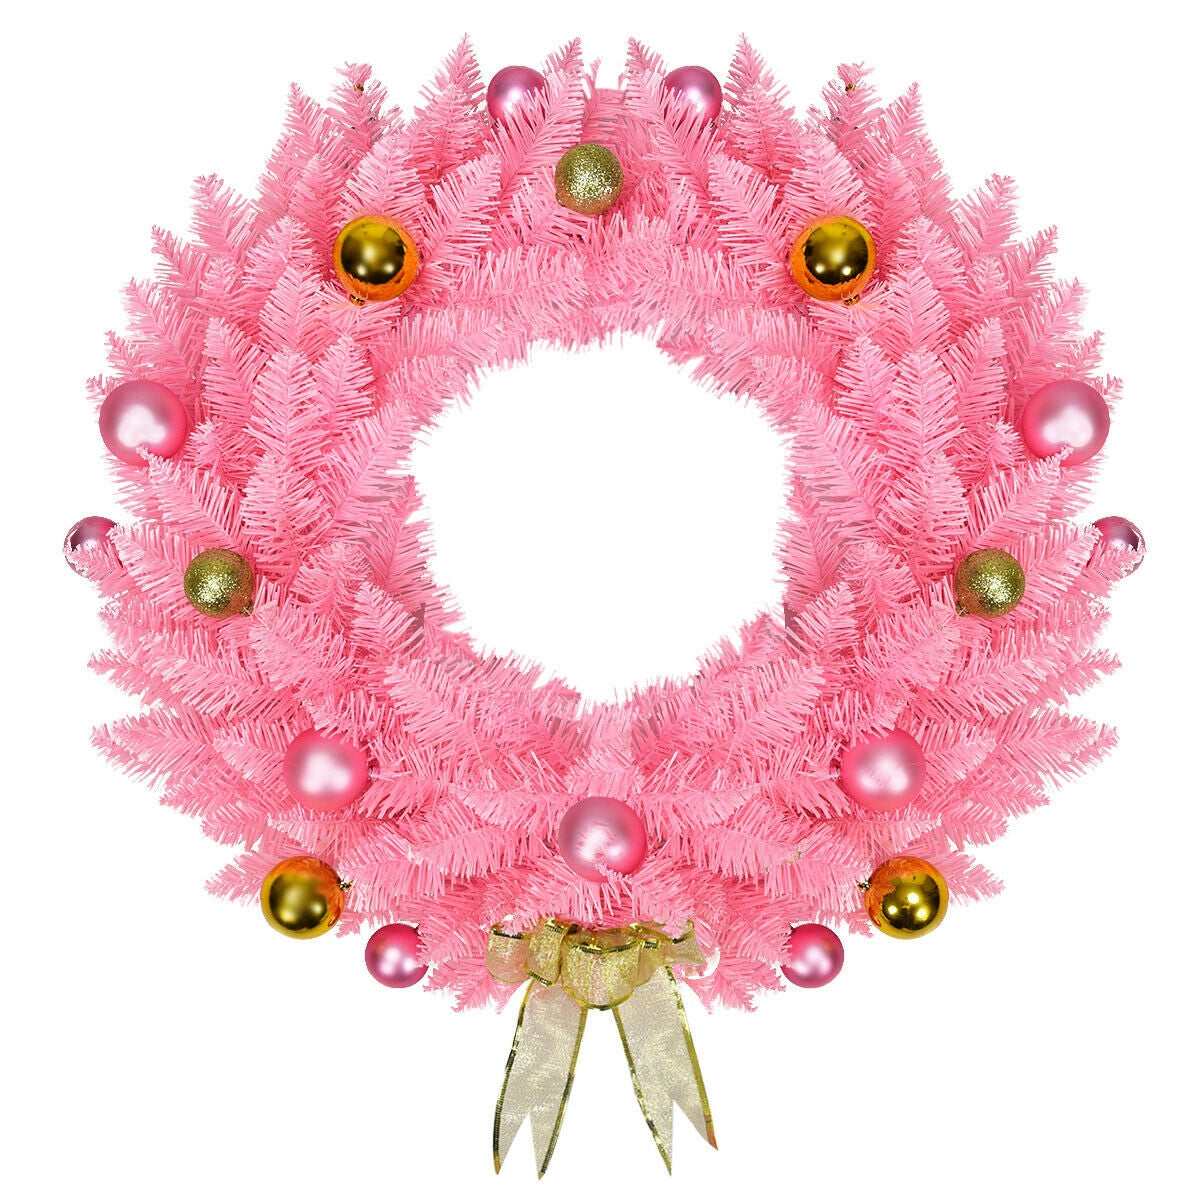 24 Inch Artificial PVC Christmas Wreath with Ornament Balls-Boyel Living